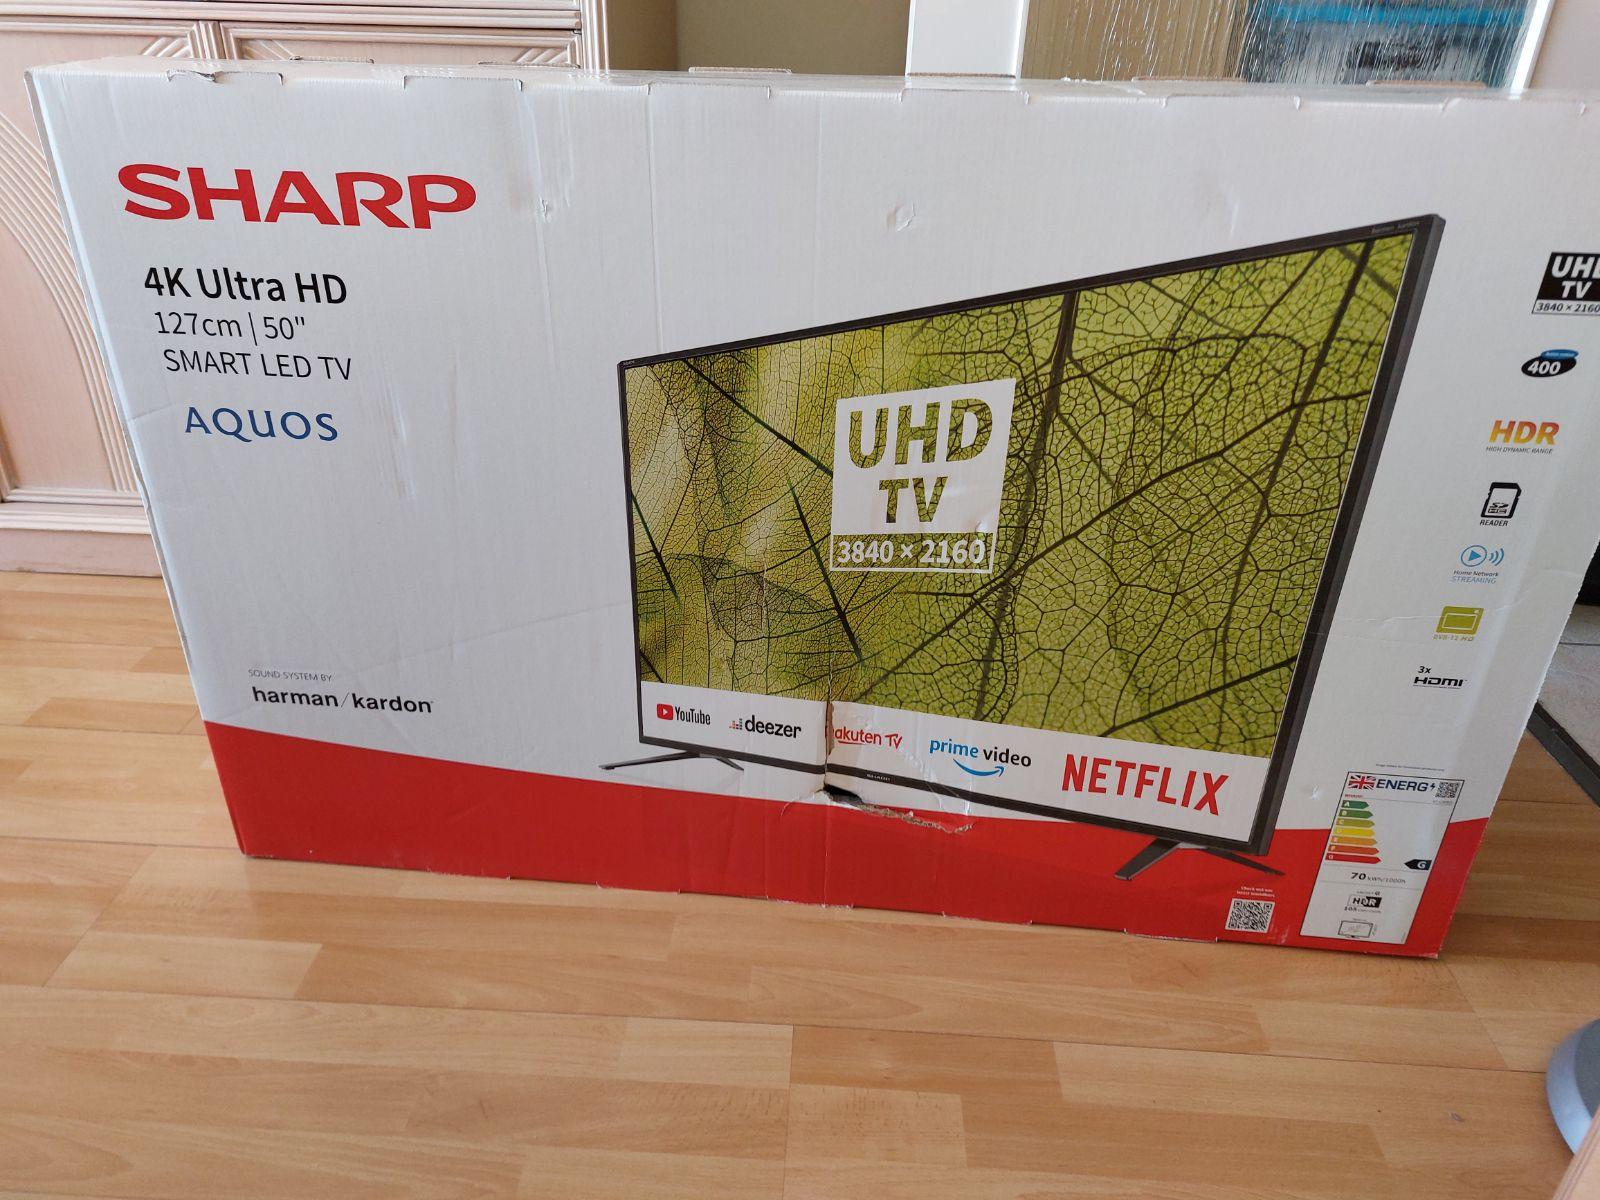 50 4K ULTRA HD  50BJ2I - Sharp Europe